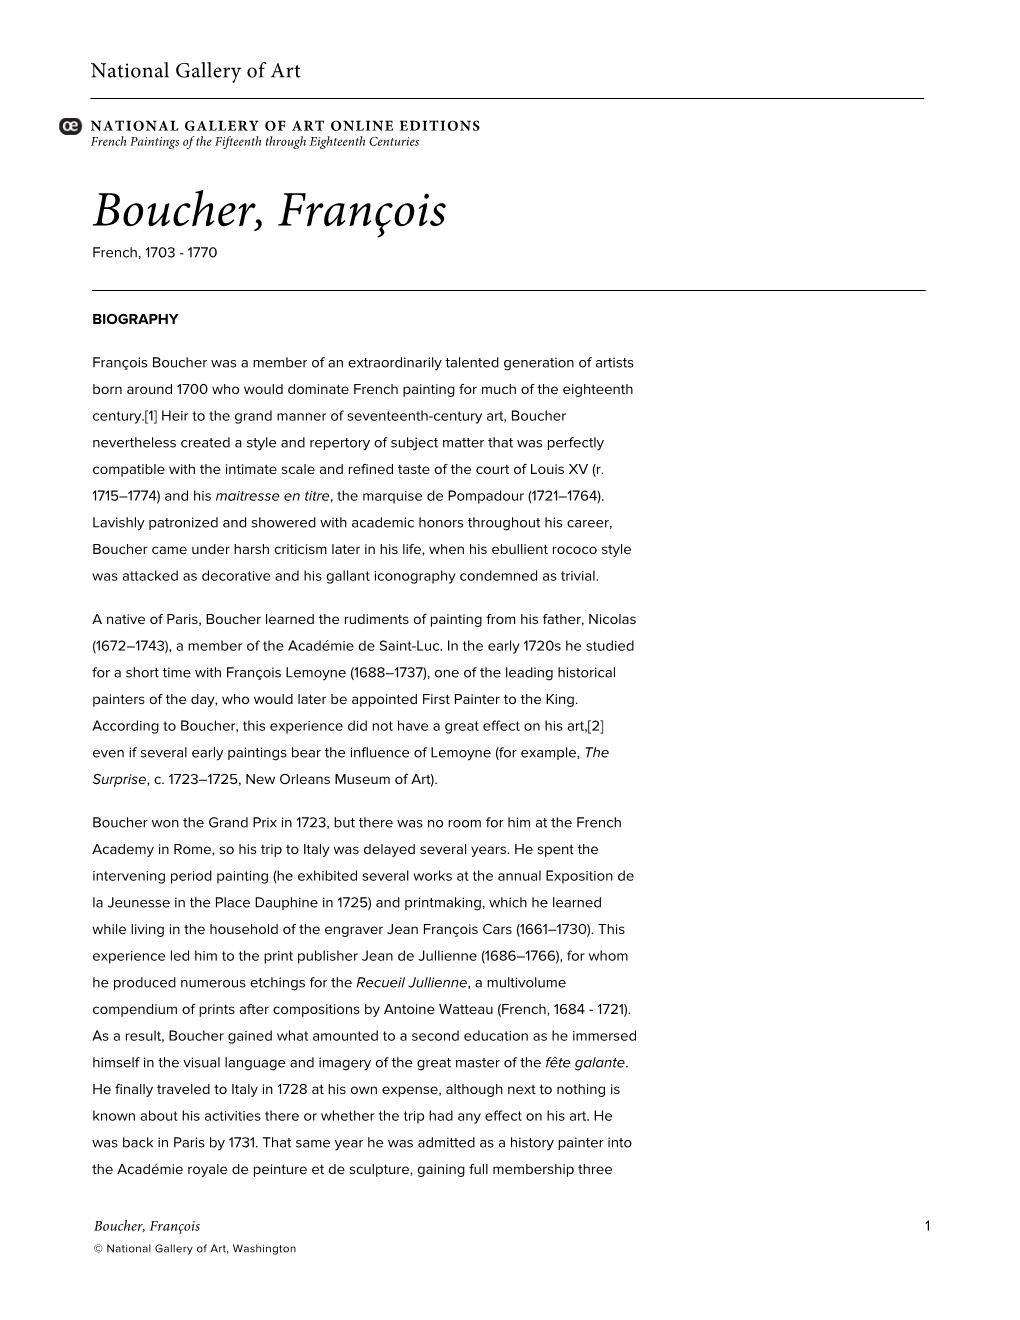 Boucher, François French, 1703 - 1770